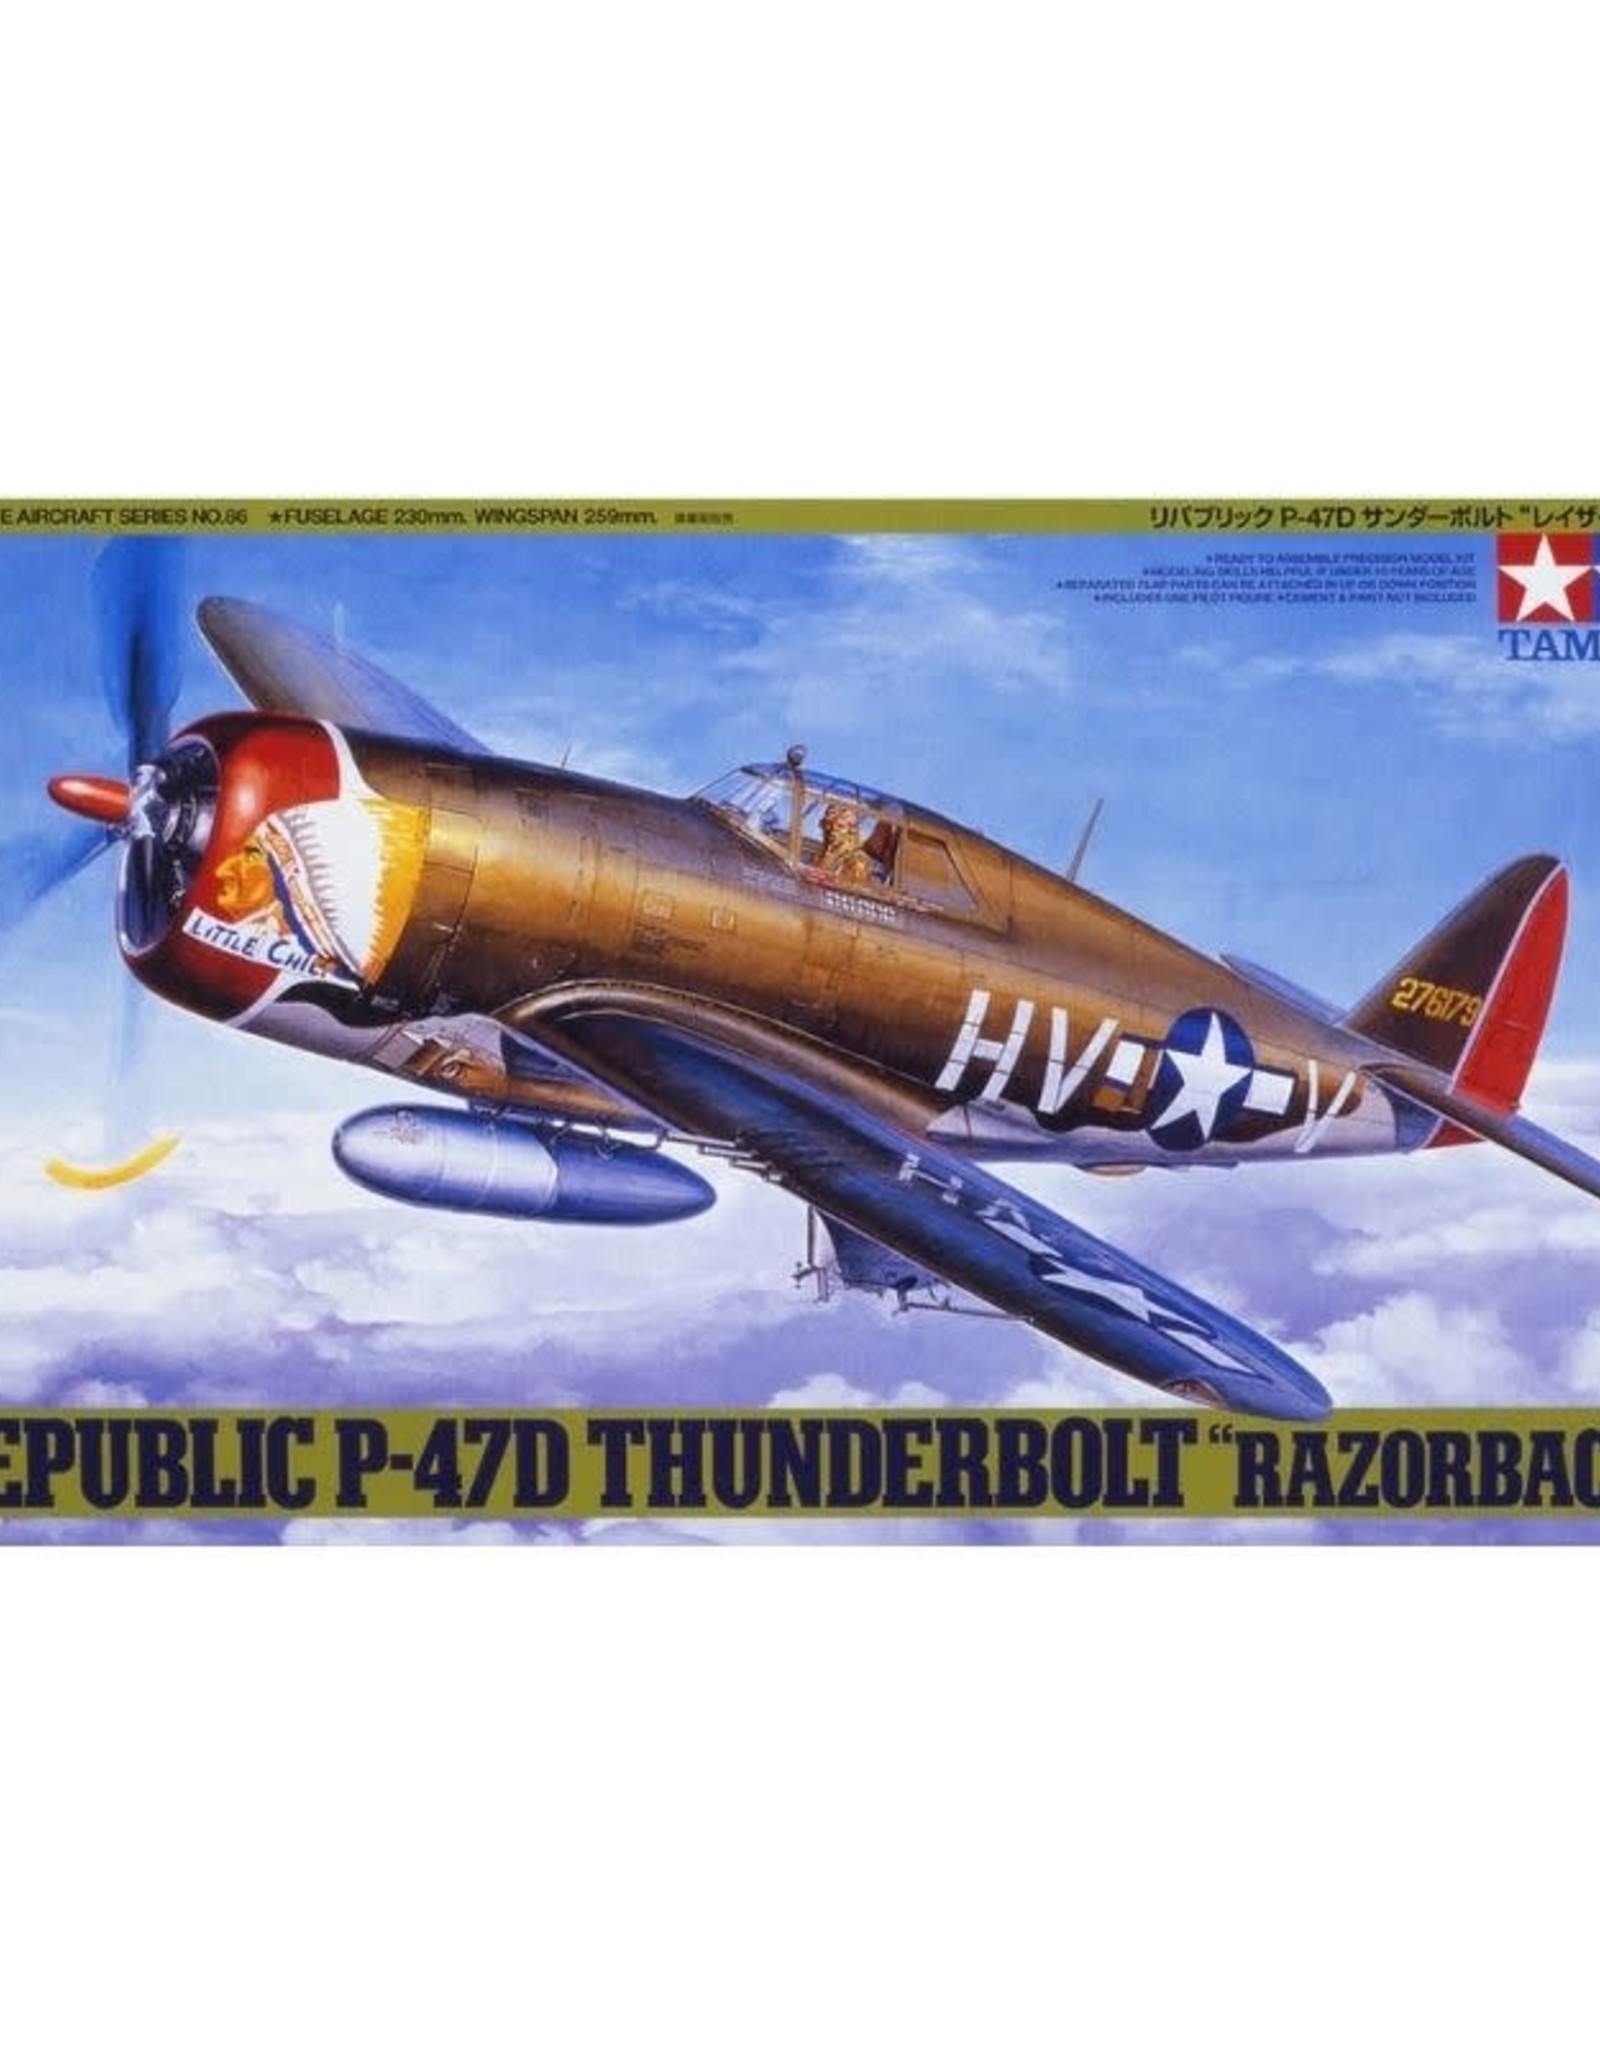 Republic P-47D Thunderbolt - Razorback